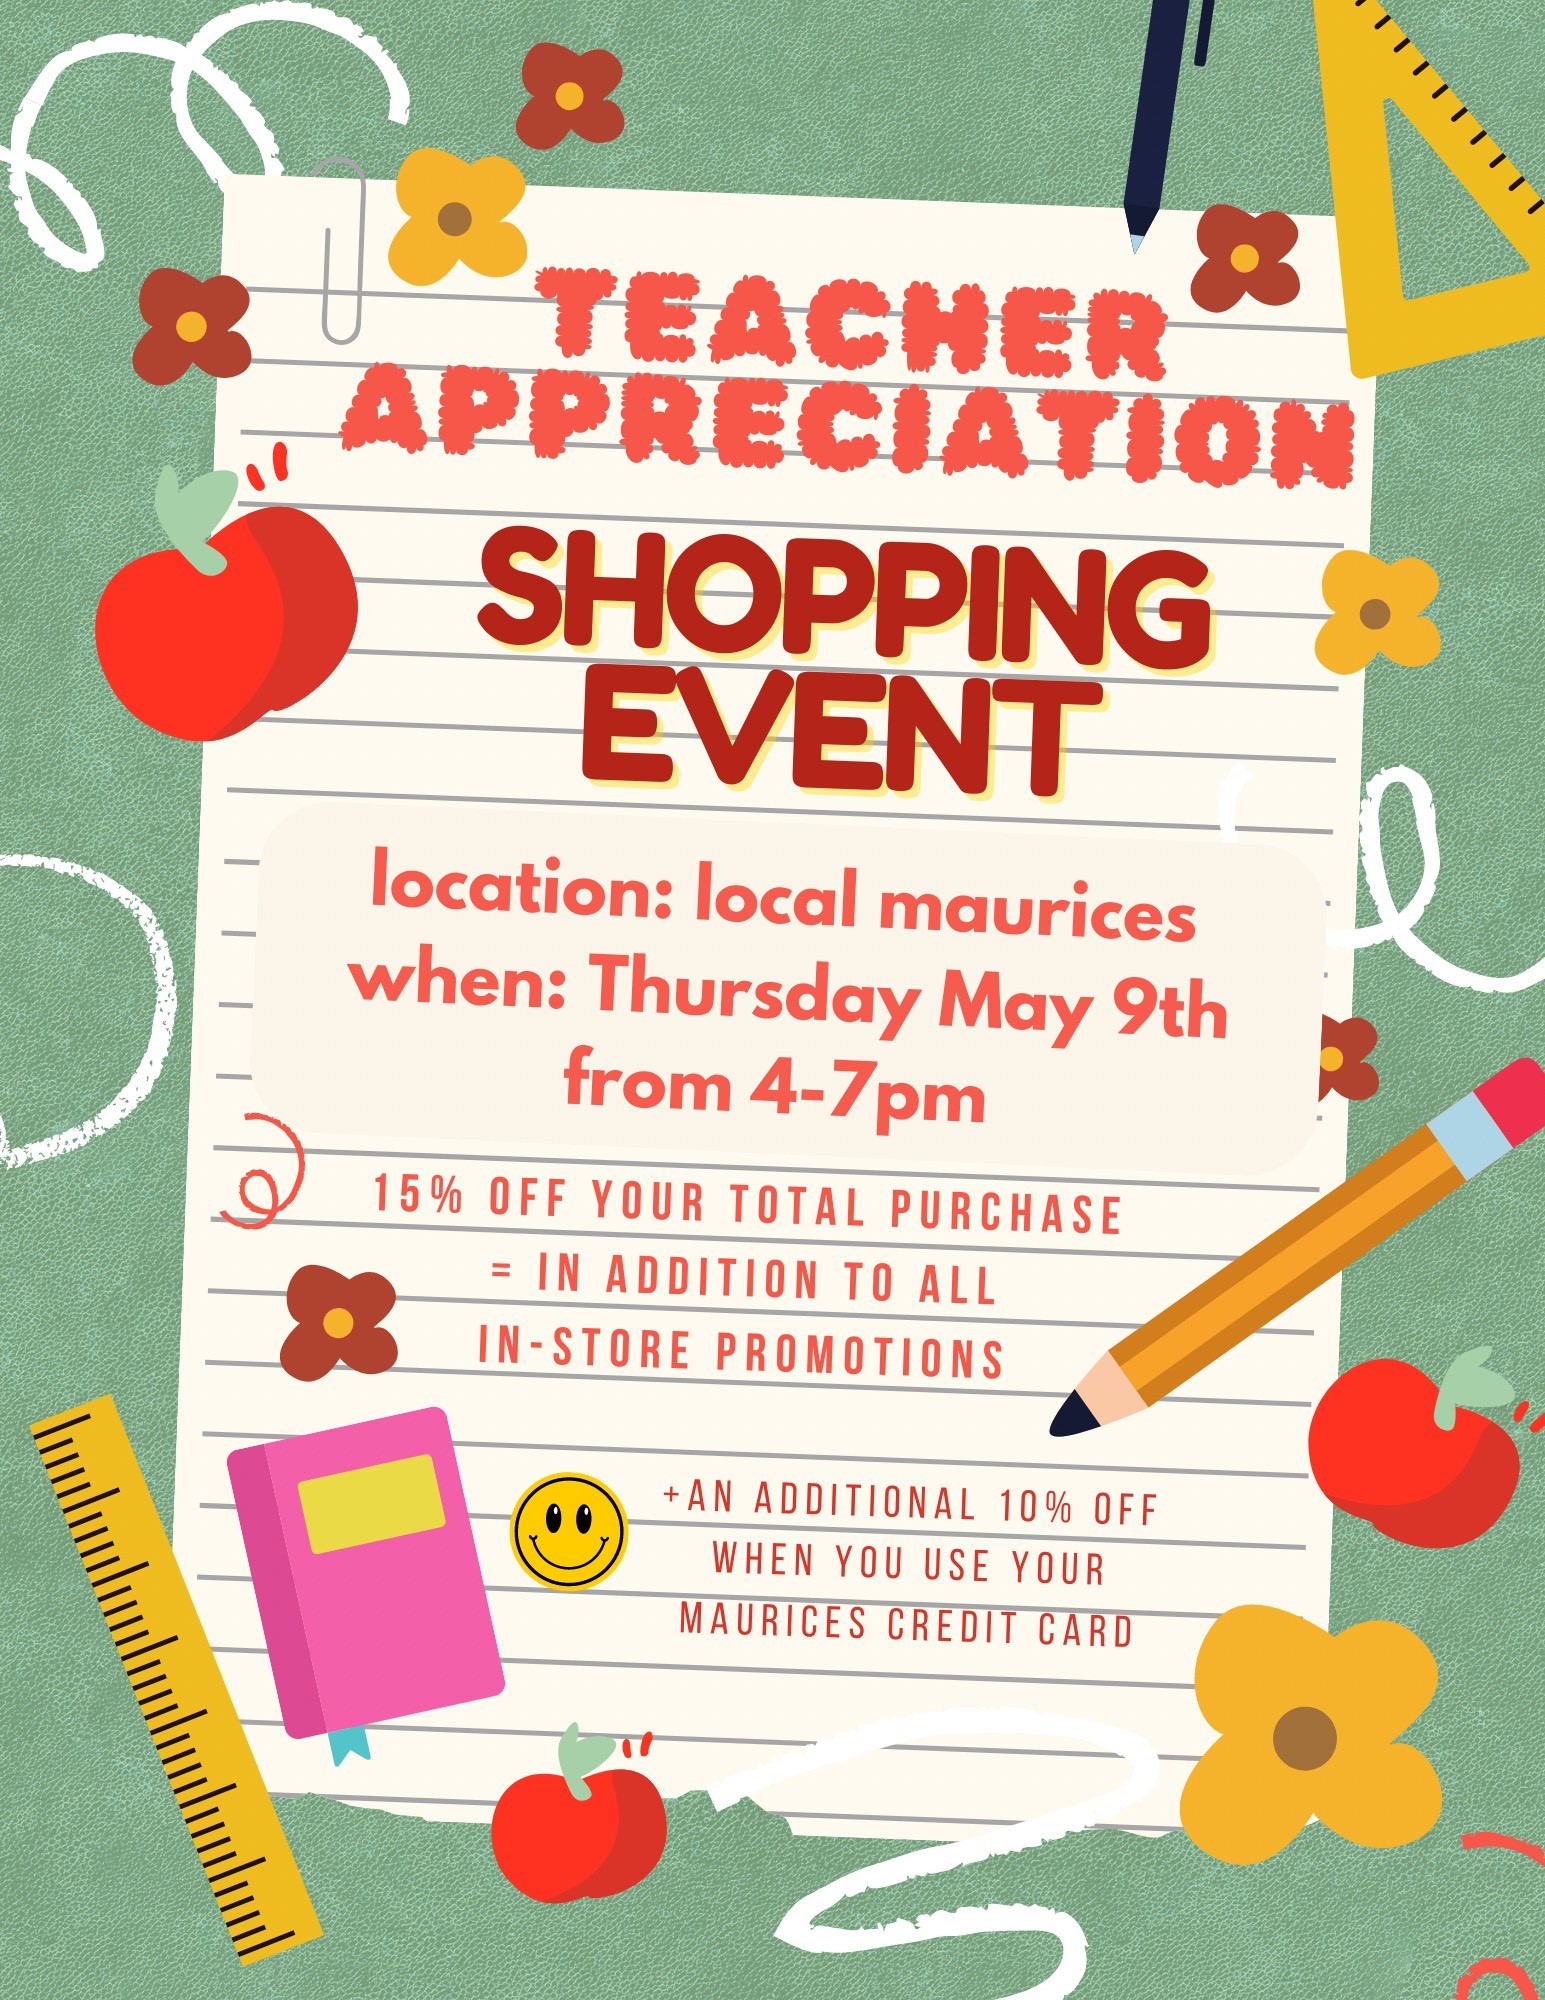 Maurices Teacher Appreciation Shopping Event